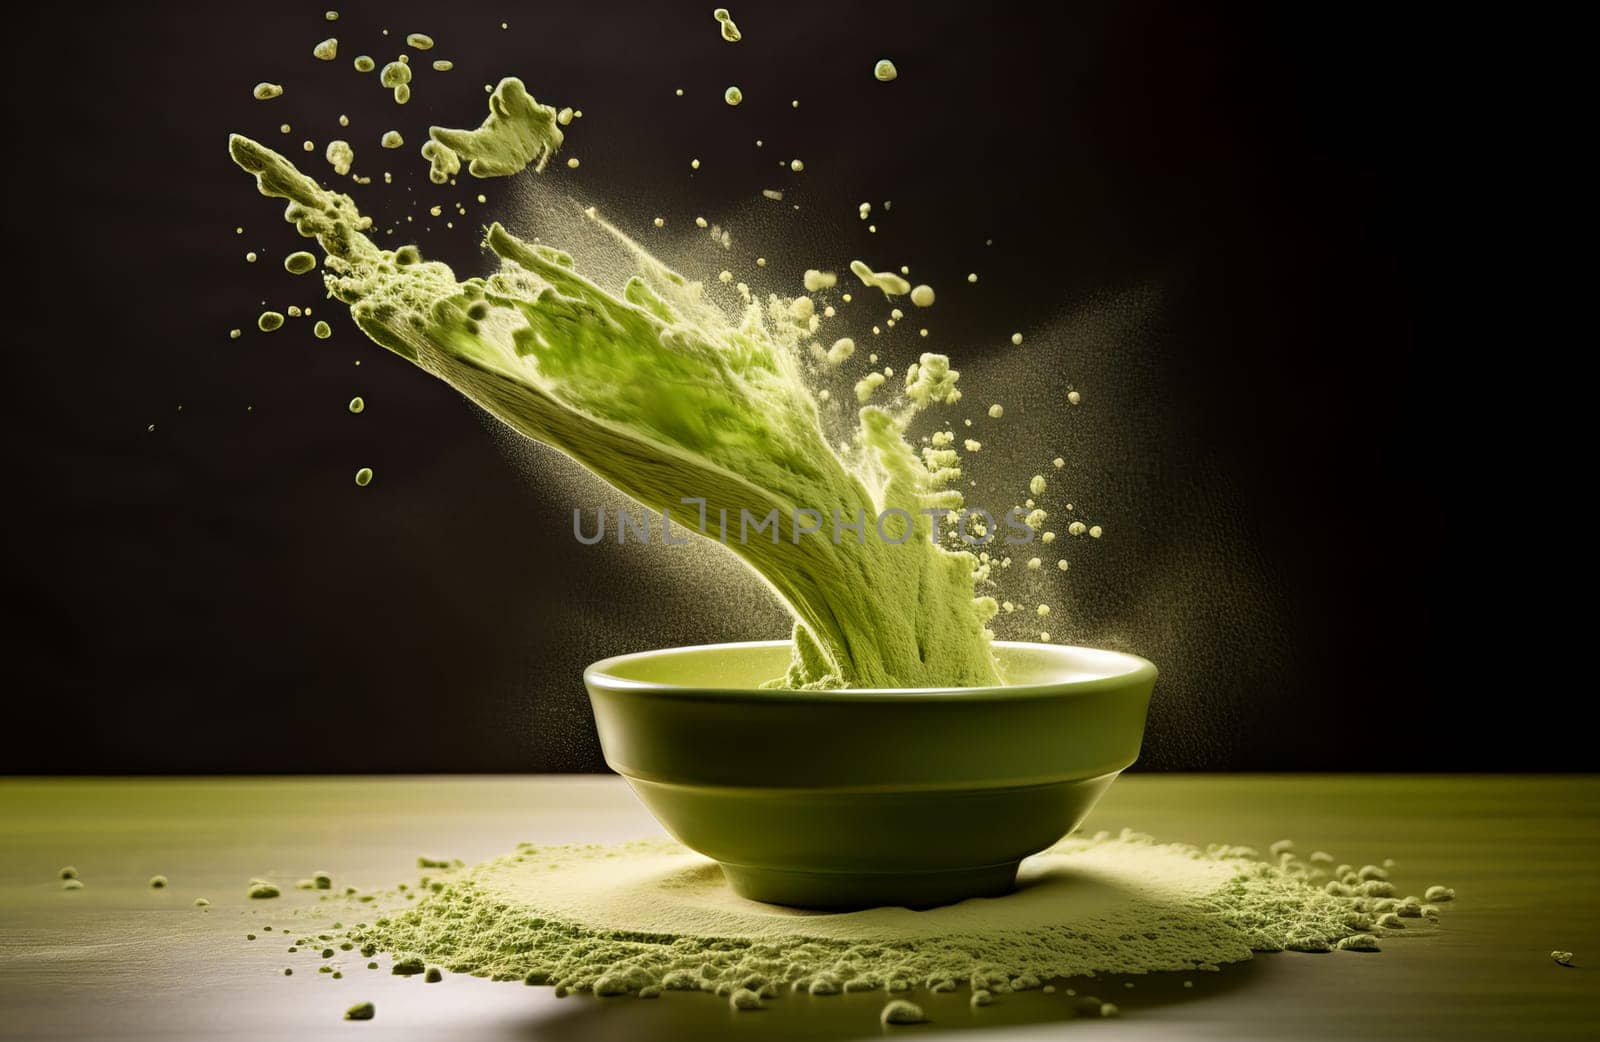 Dynamic splash of a green smoothie captured against a dark background